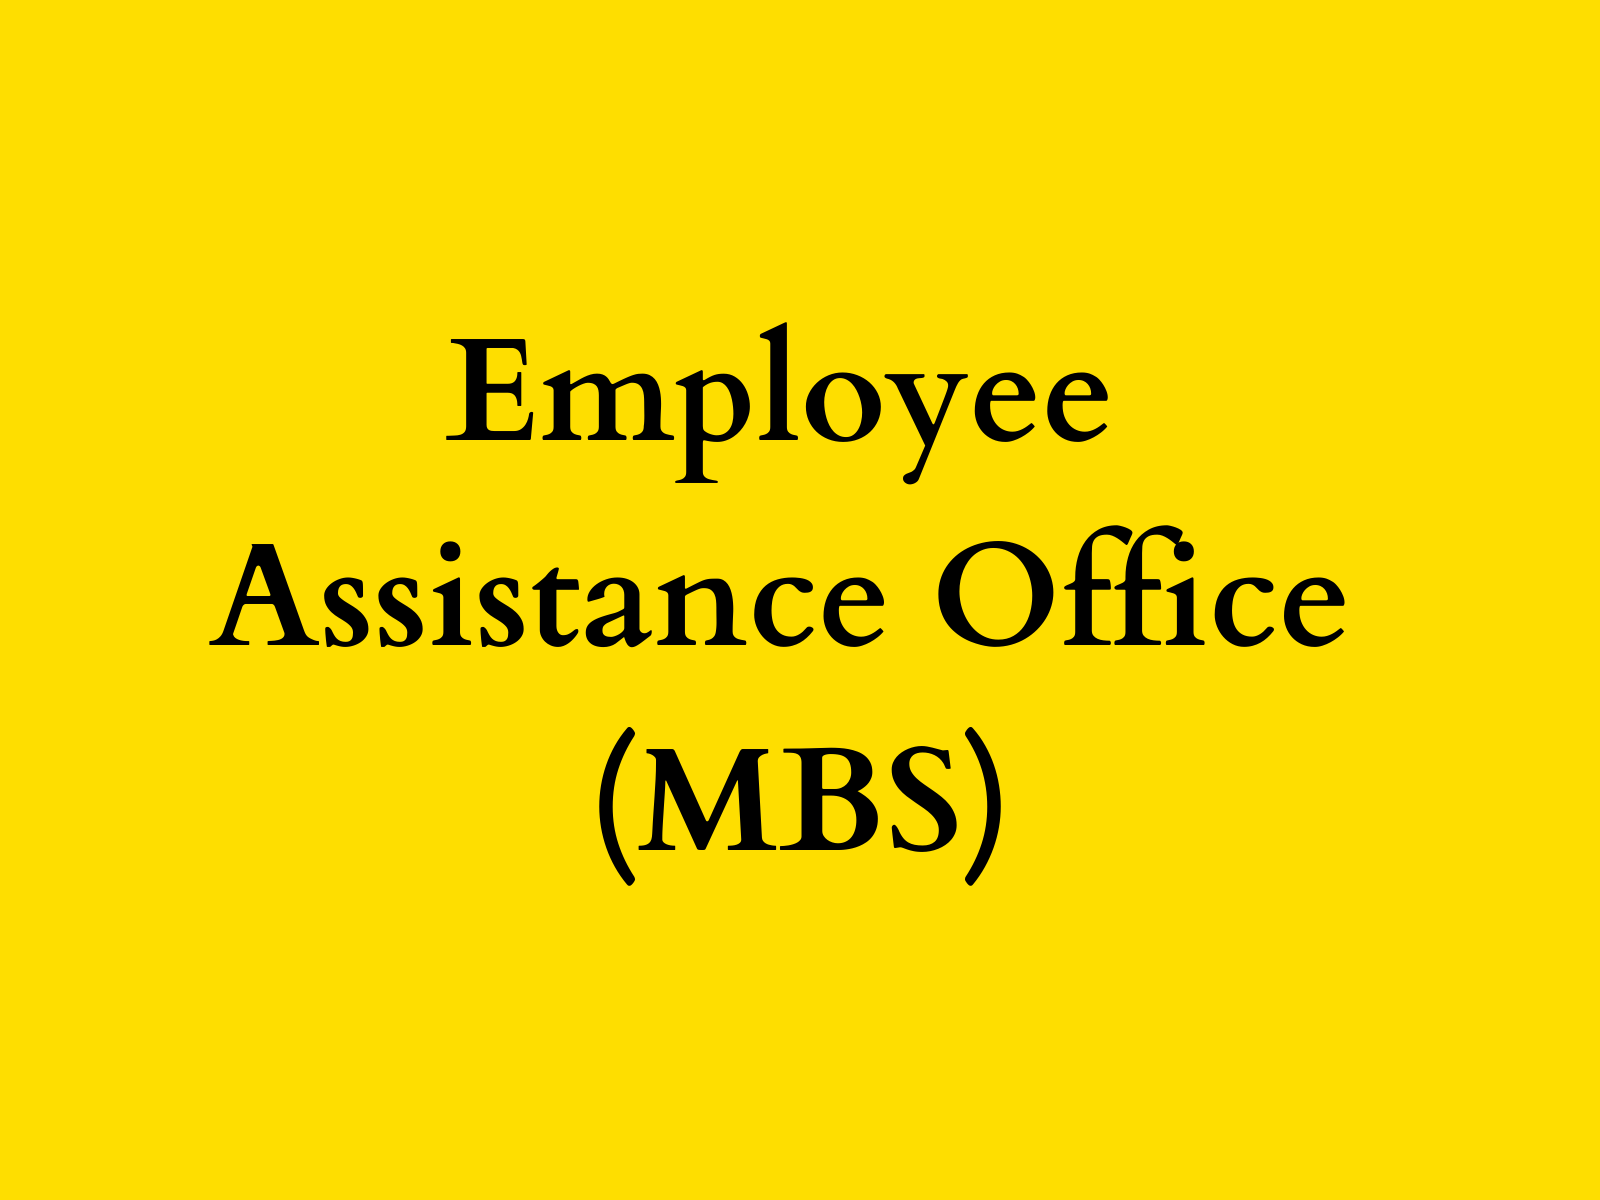 Employee Assistance Office